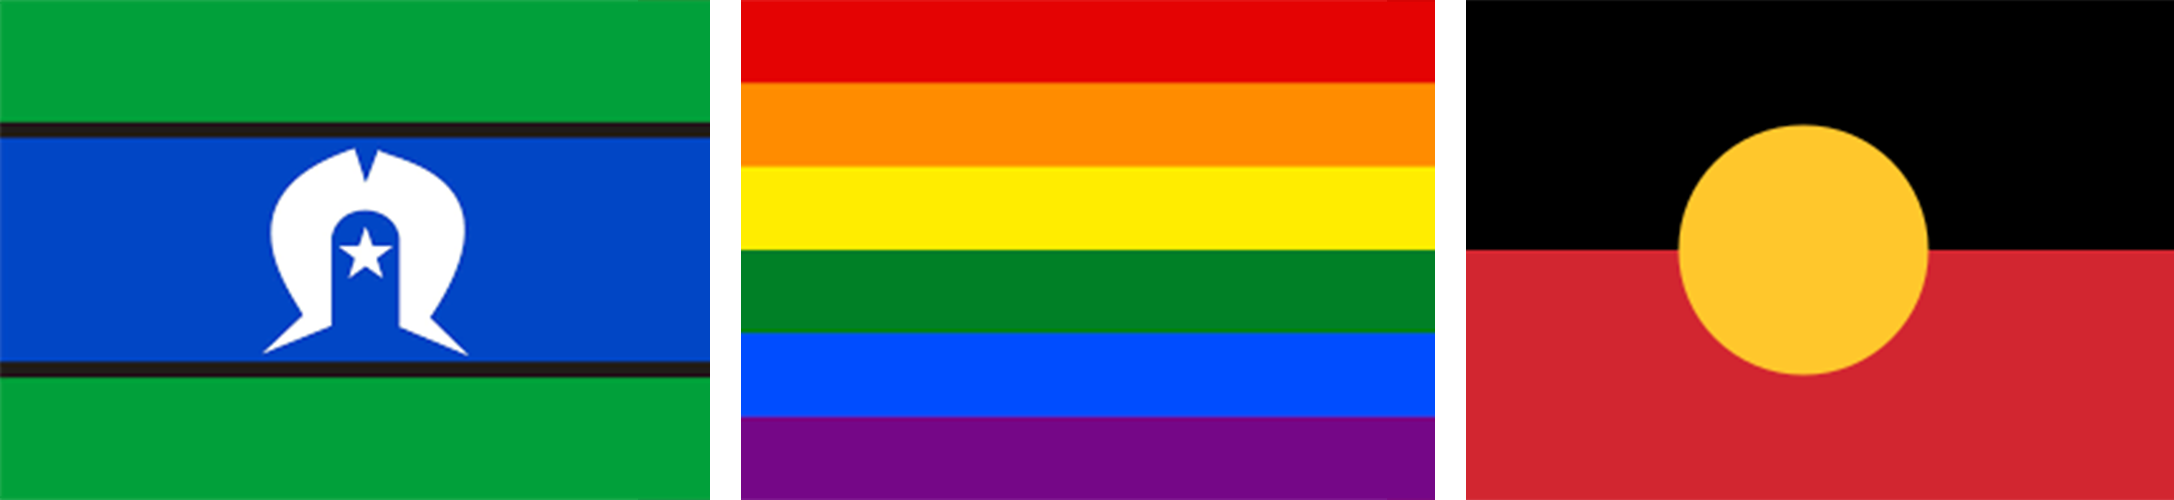 Torres Strait Islander Flag, LGBTIQ flag, Aboriginal flag